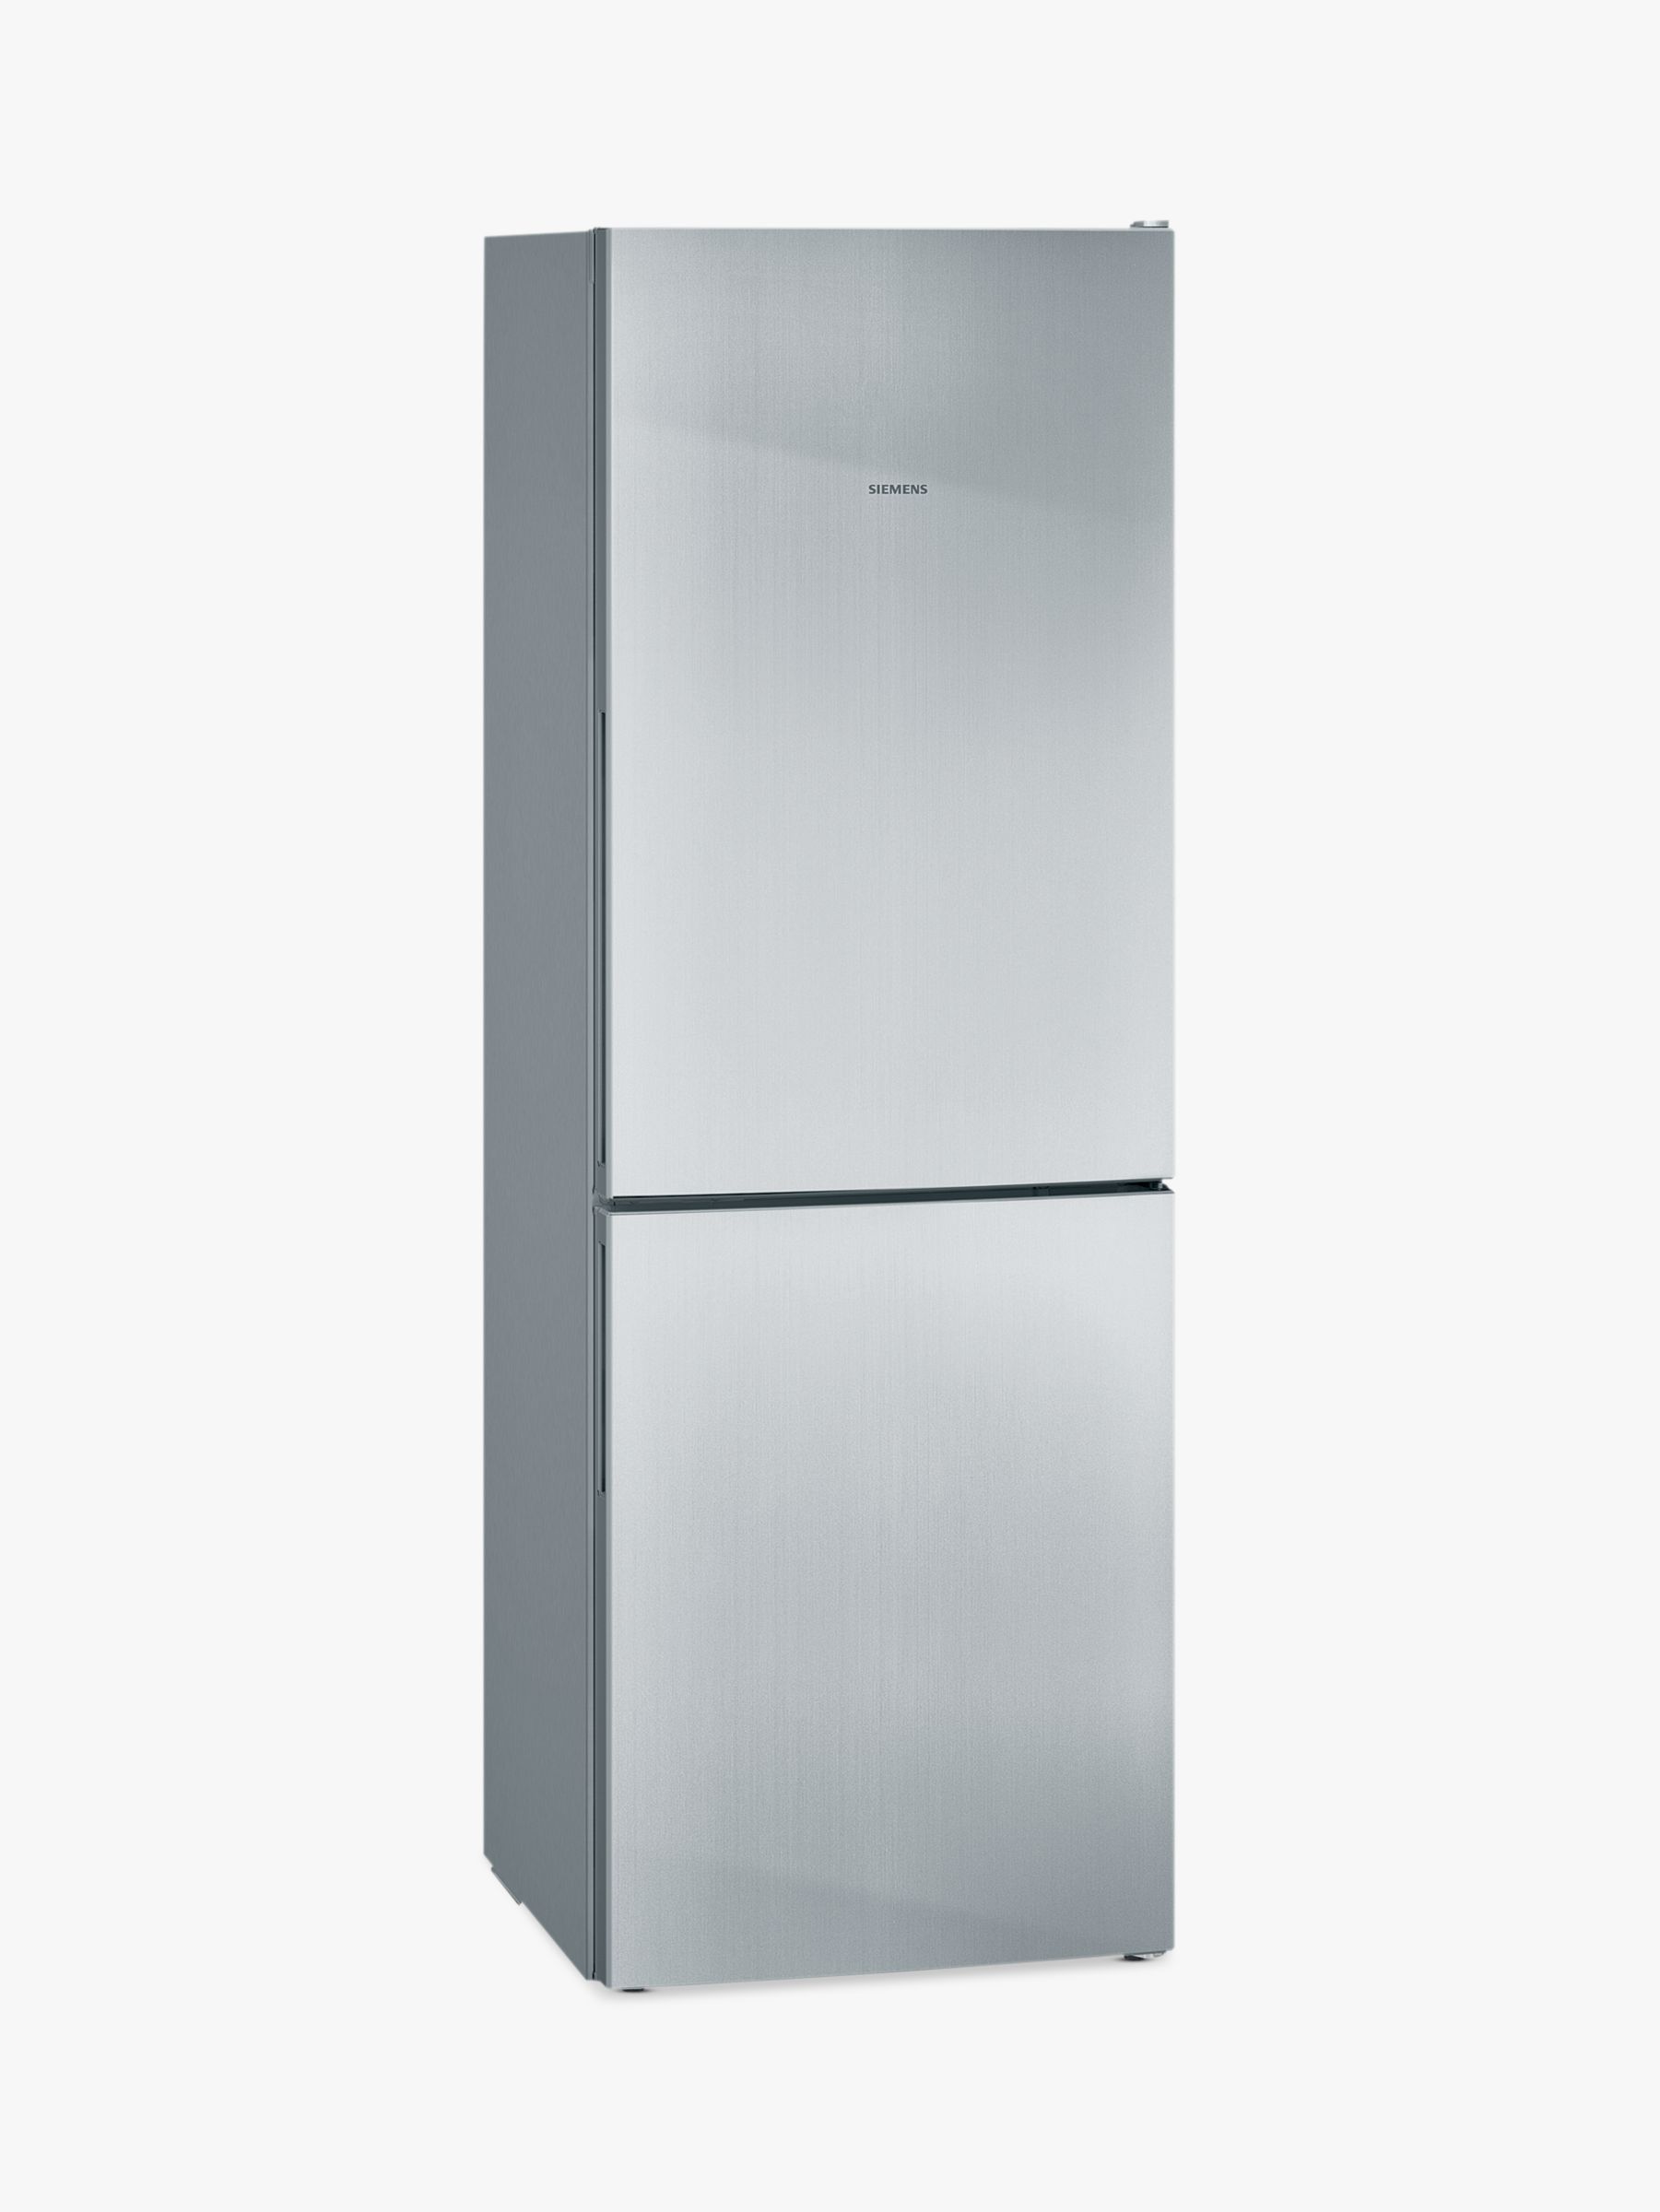 Siemens KG33VVI31G Fridge Freezer, A++ Energy Rating, 60cm Wide, Stainless Steel